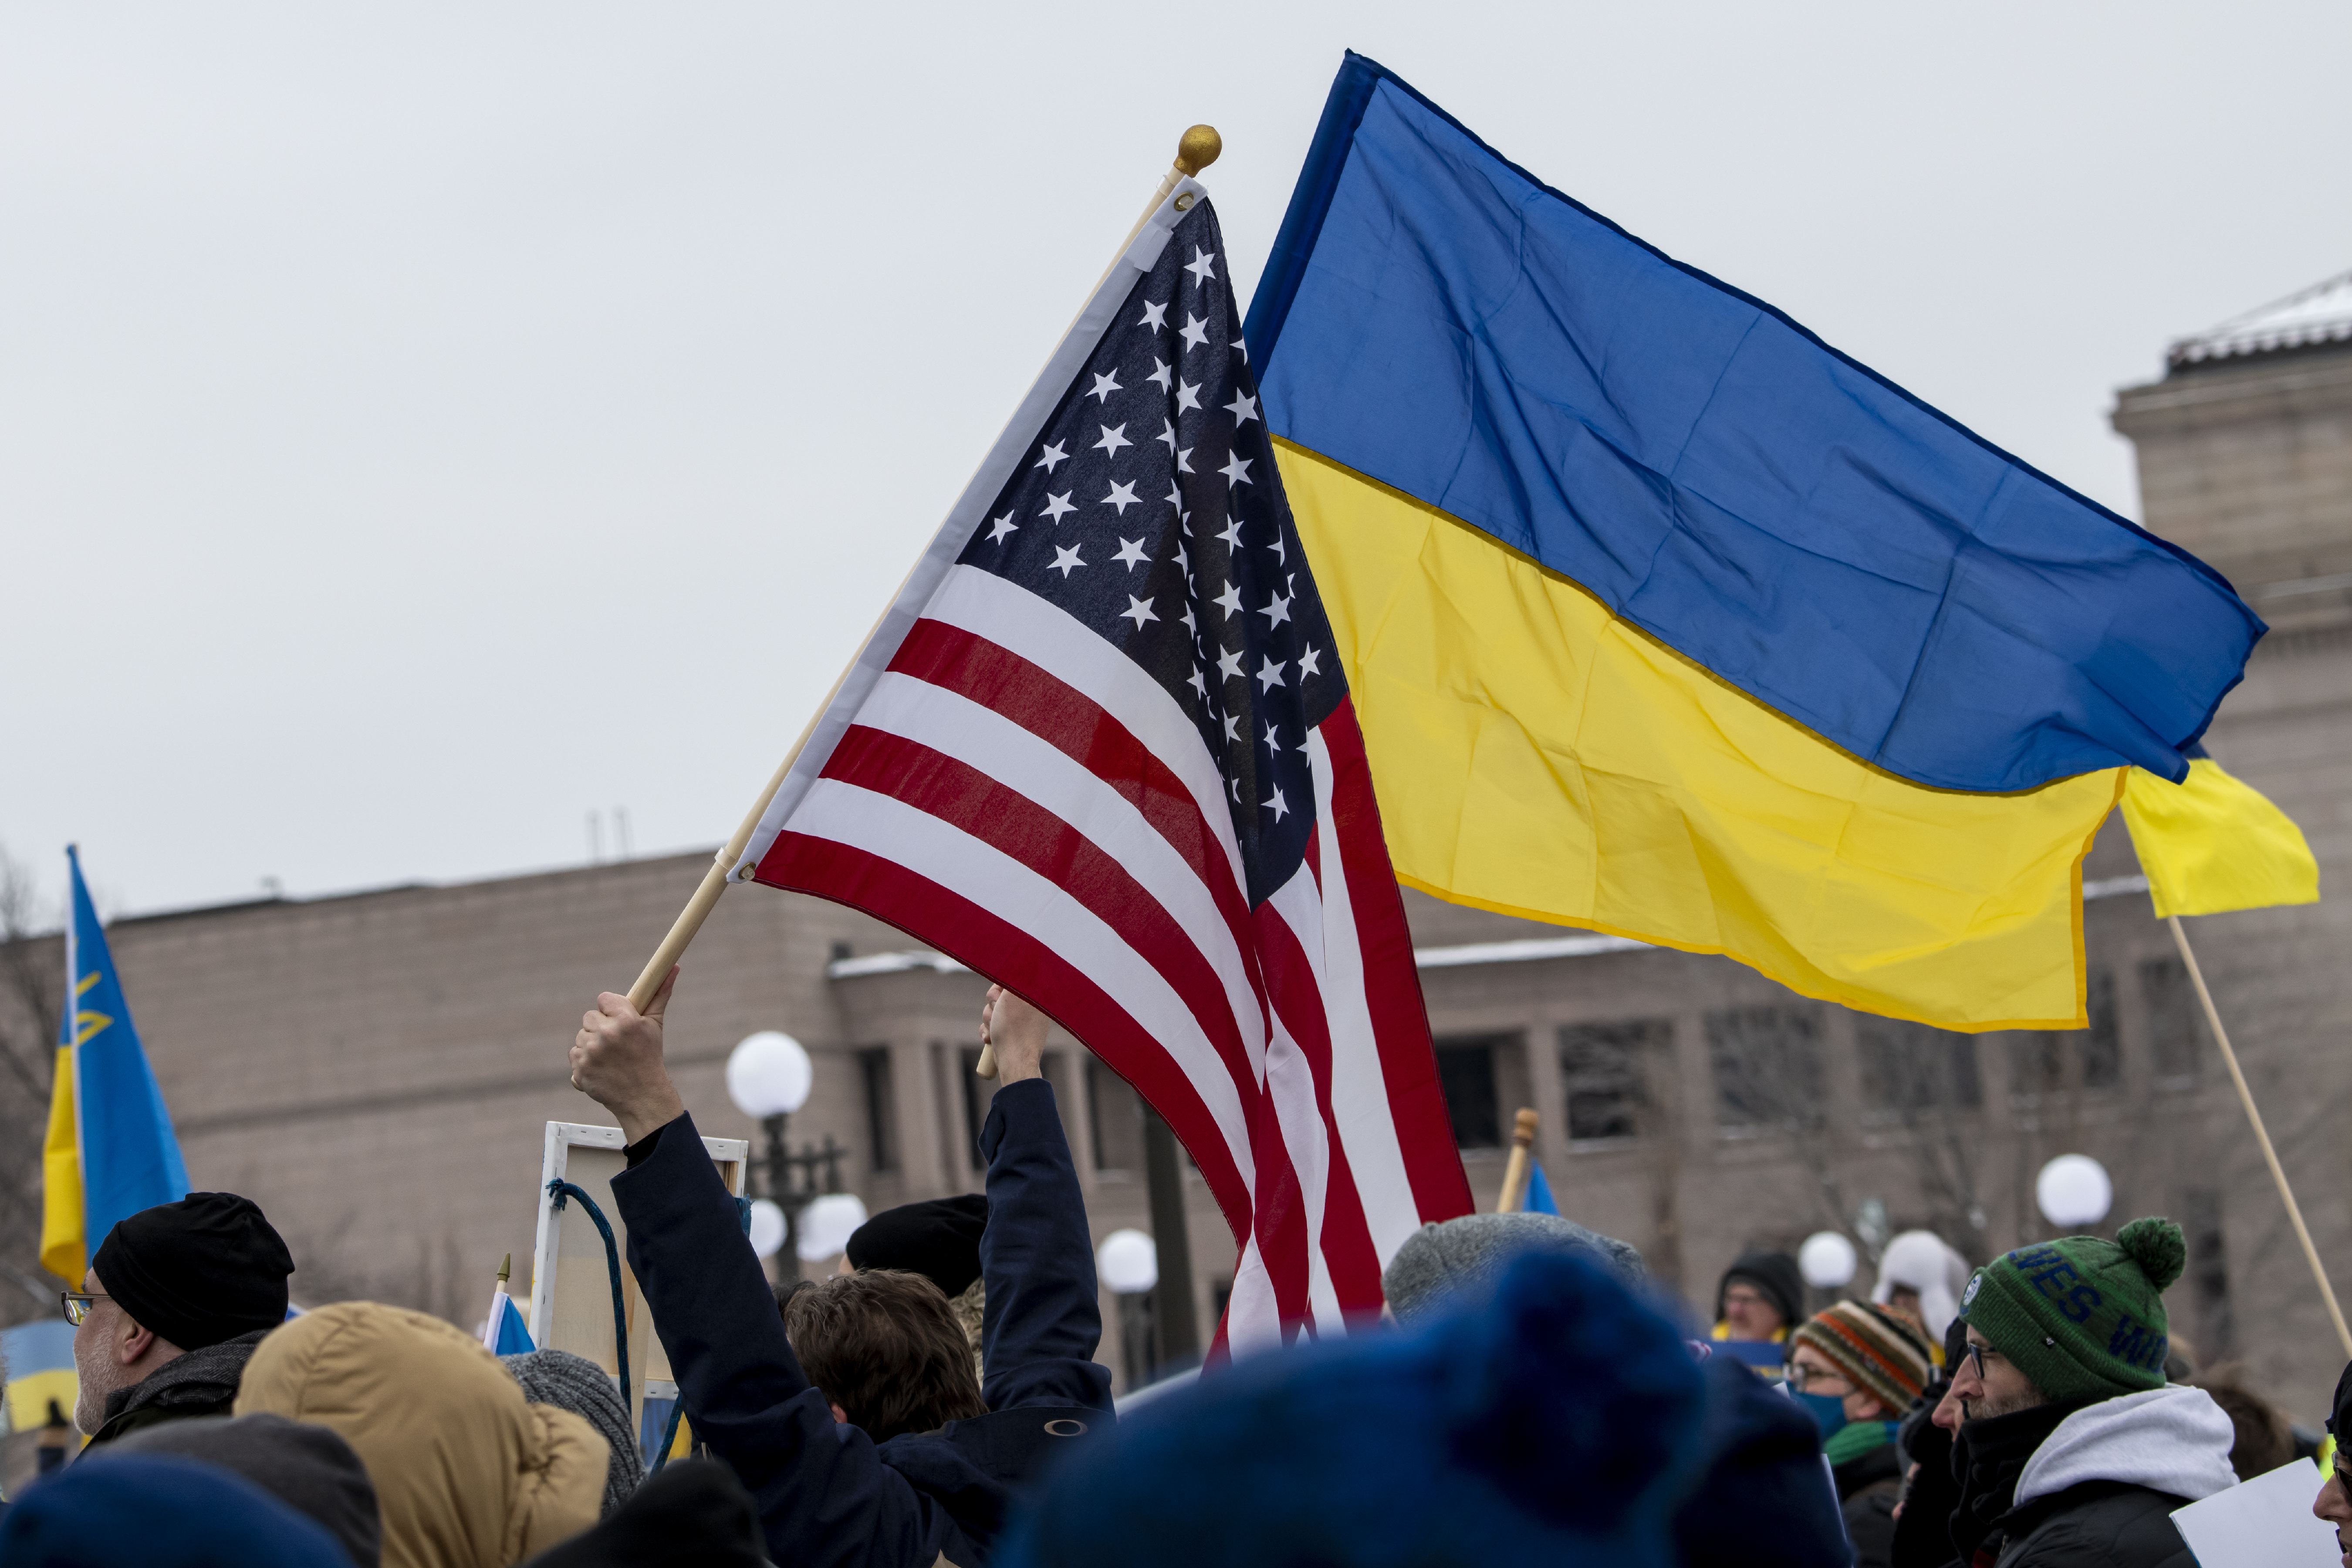 Ukrainian and American flags